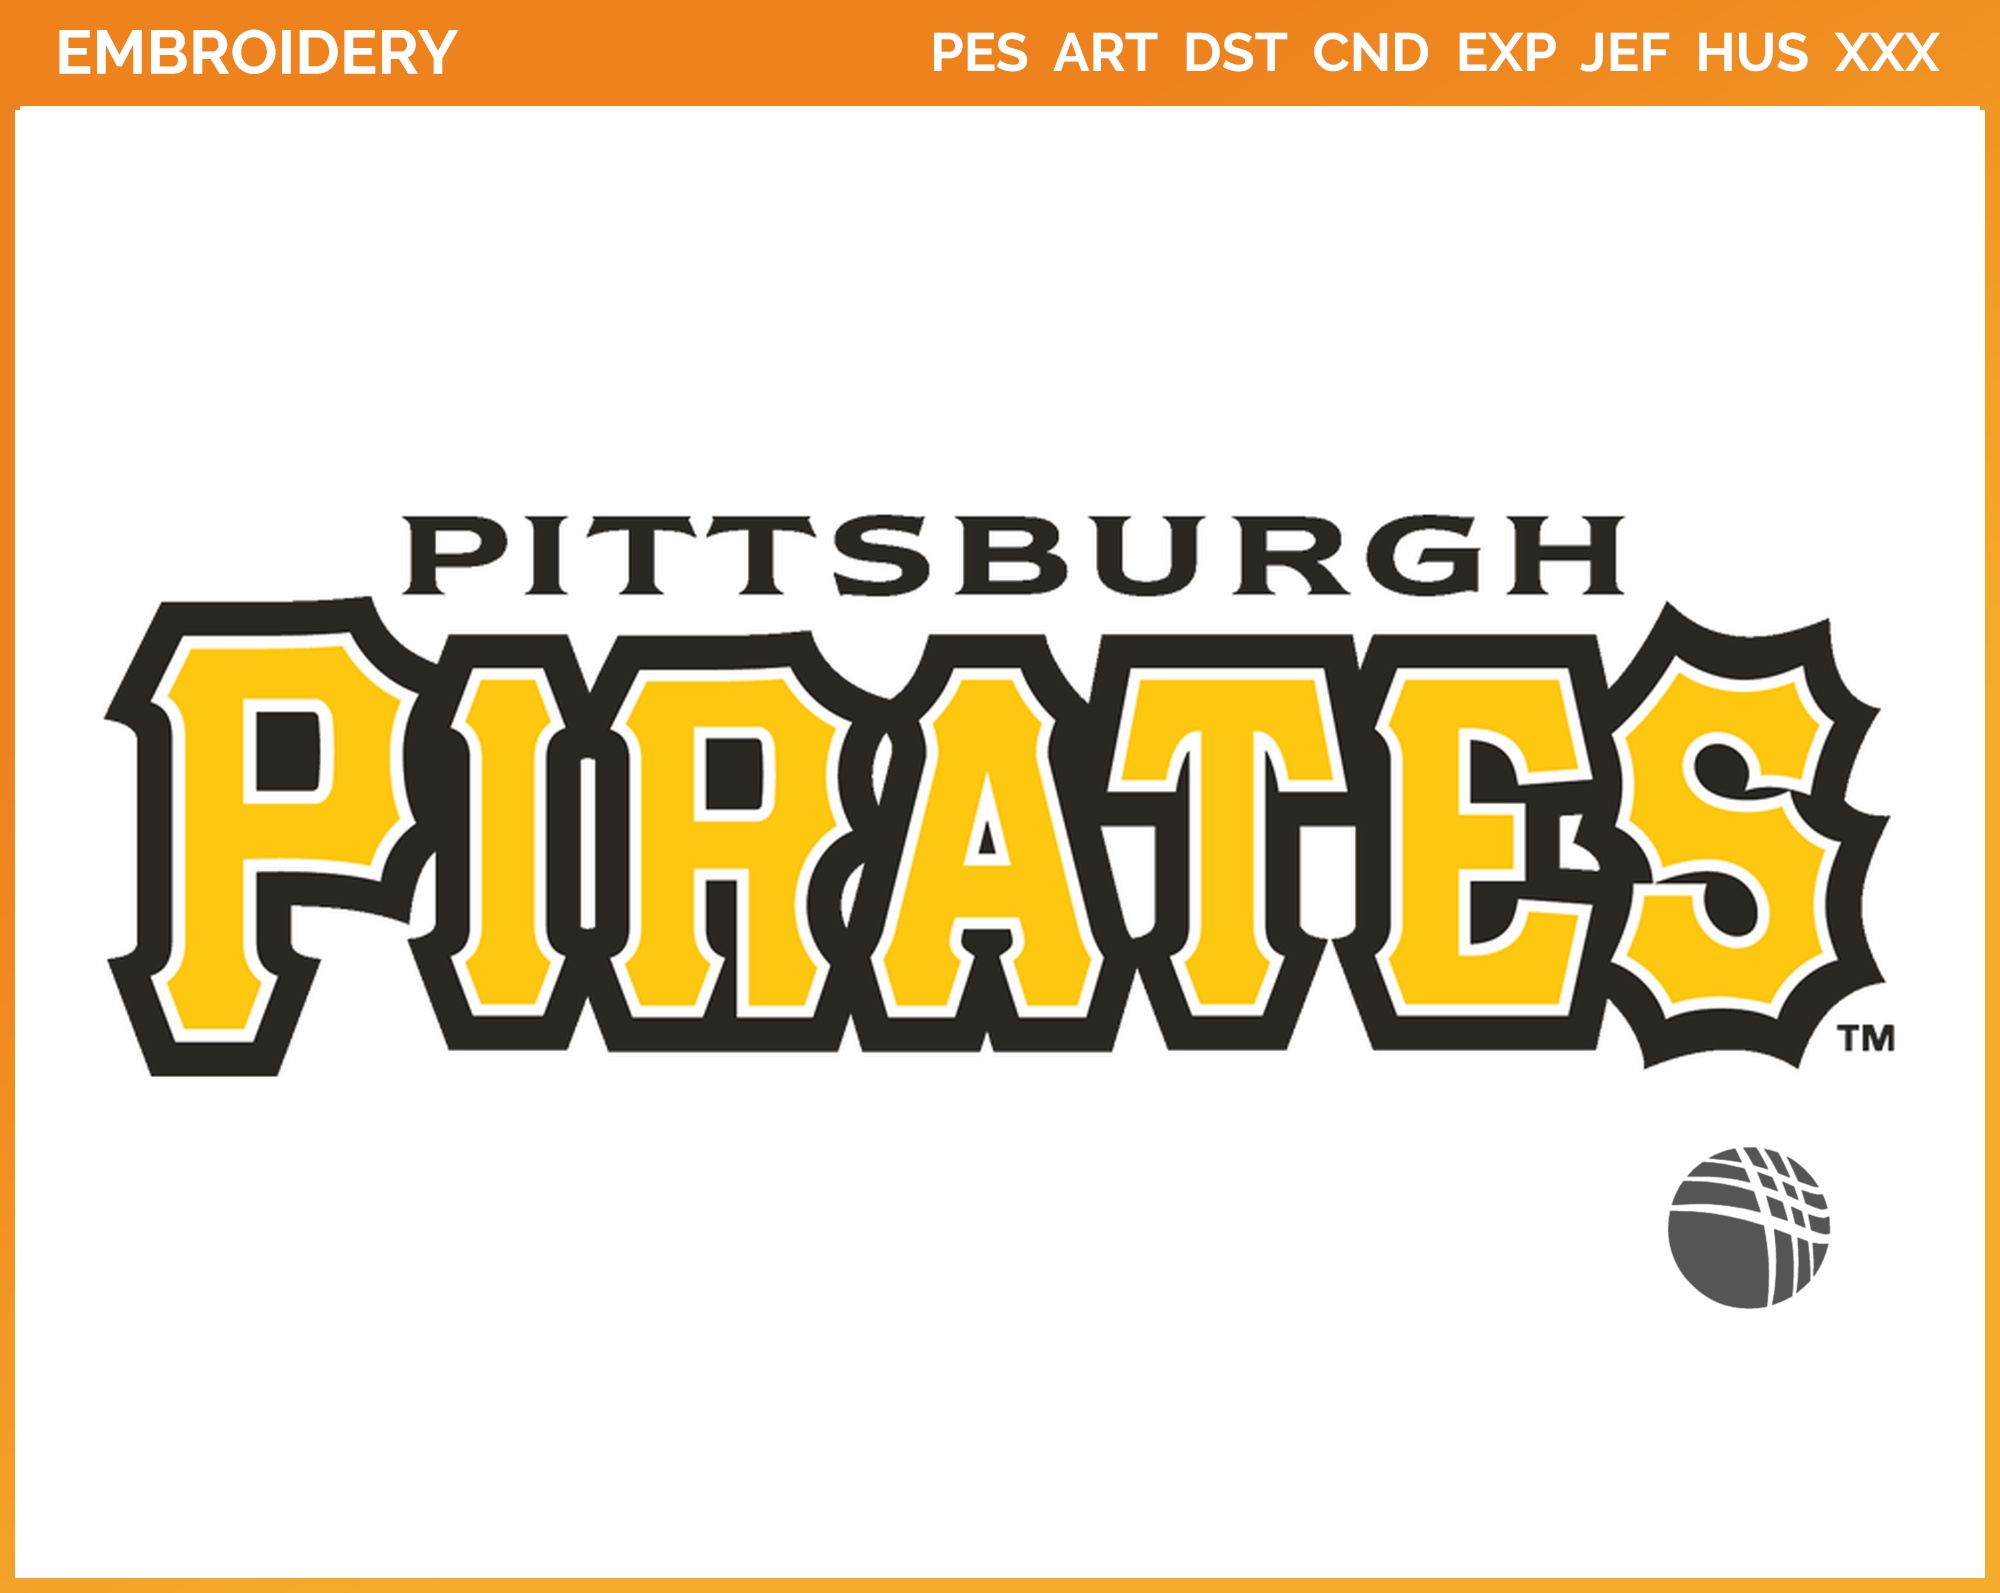 MLB Pittsburgh Pirates Logo Hawaii Baseball Jersey Shirt For Fans -  Freedomdesign